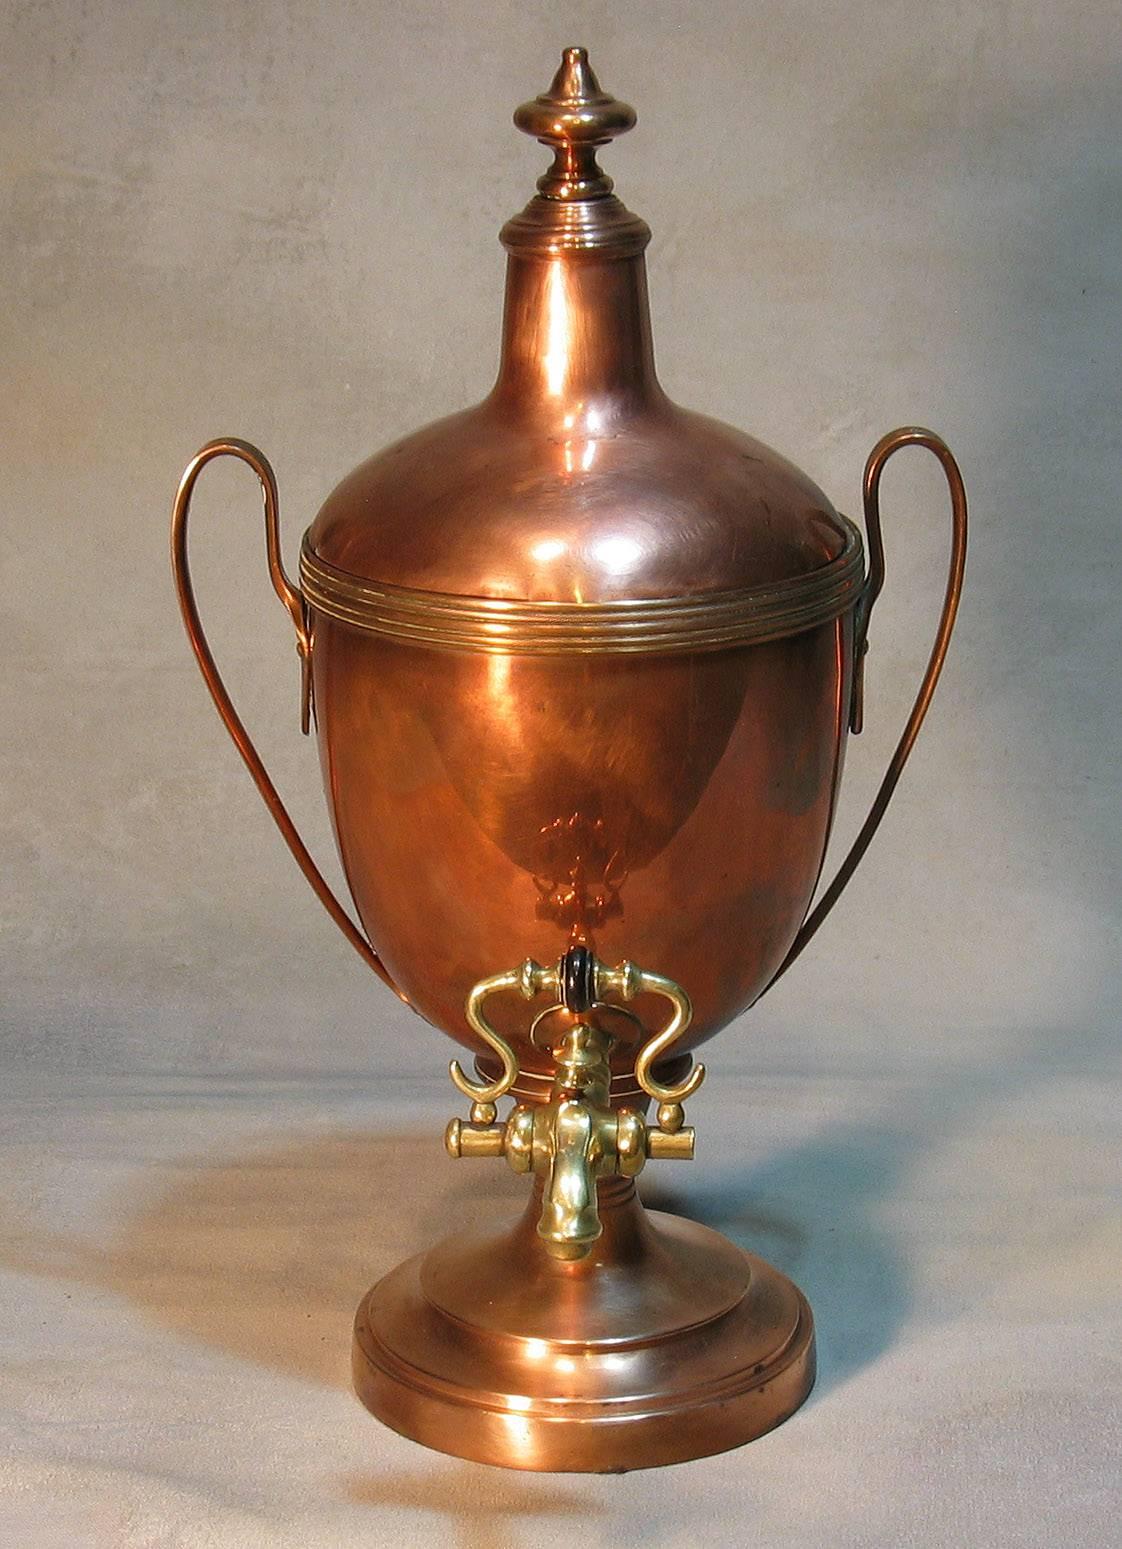 English Victorian Copper Hot Water Urn, Paris Exhibition 1855 Medal Winner Design